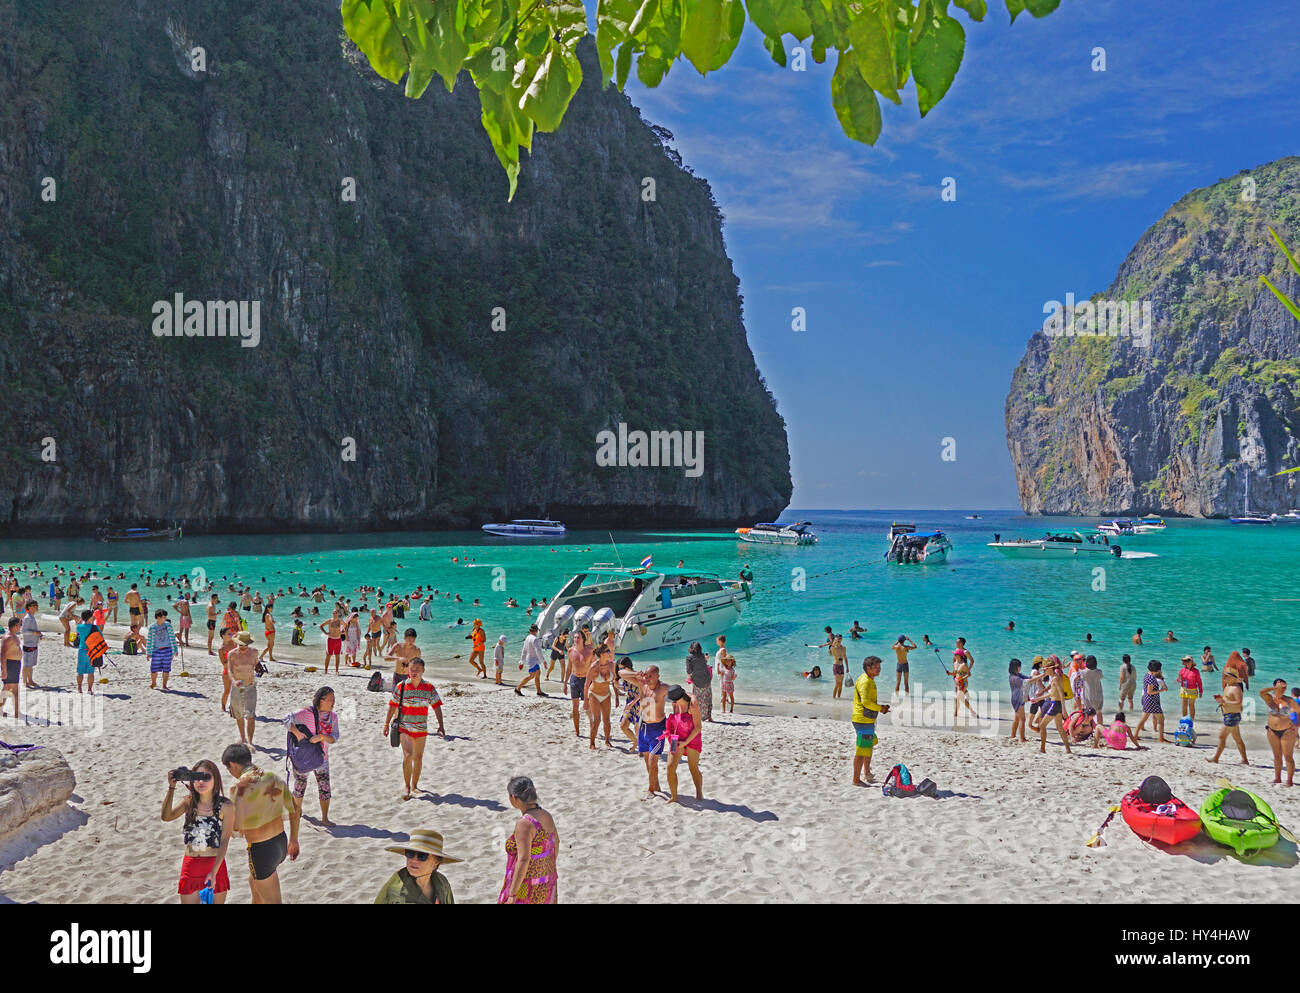 Crowded Maya Bay on Phi Phi Leh island, Thailand. Stock Photo